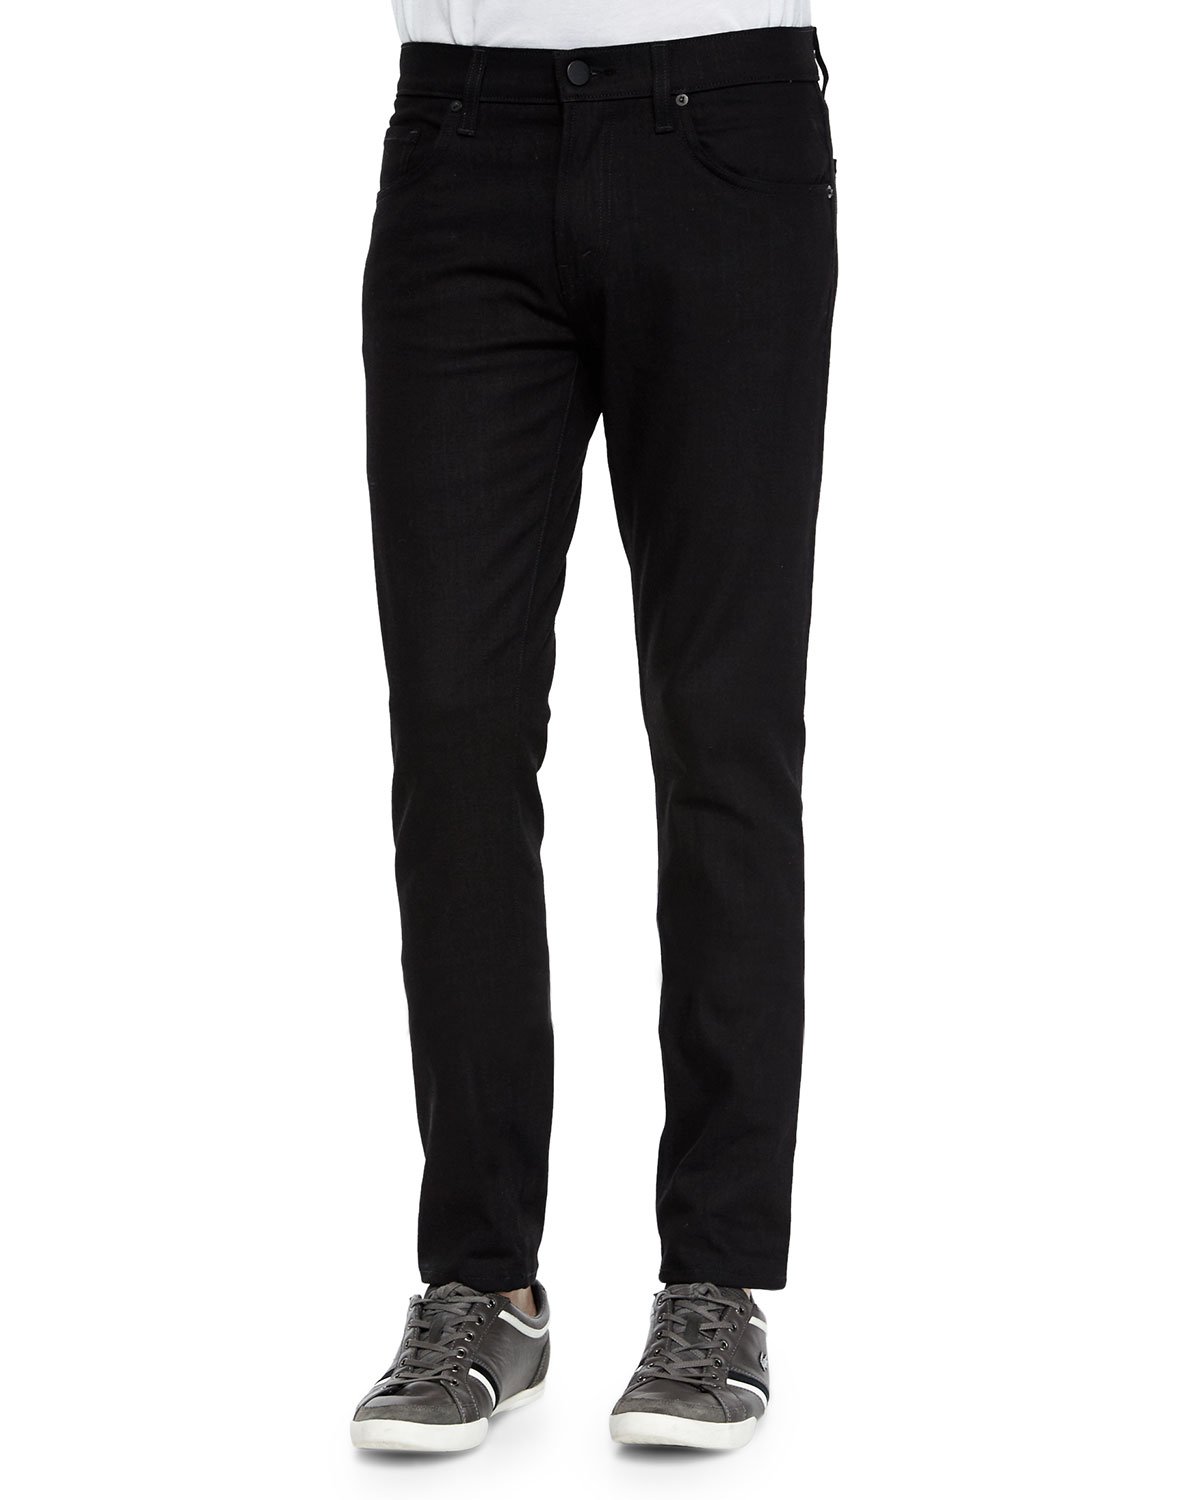 Lyst - J brand Mick Solid Denim Jeans in Black for Men